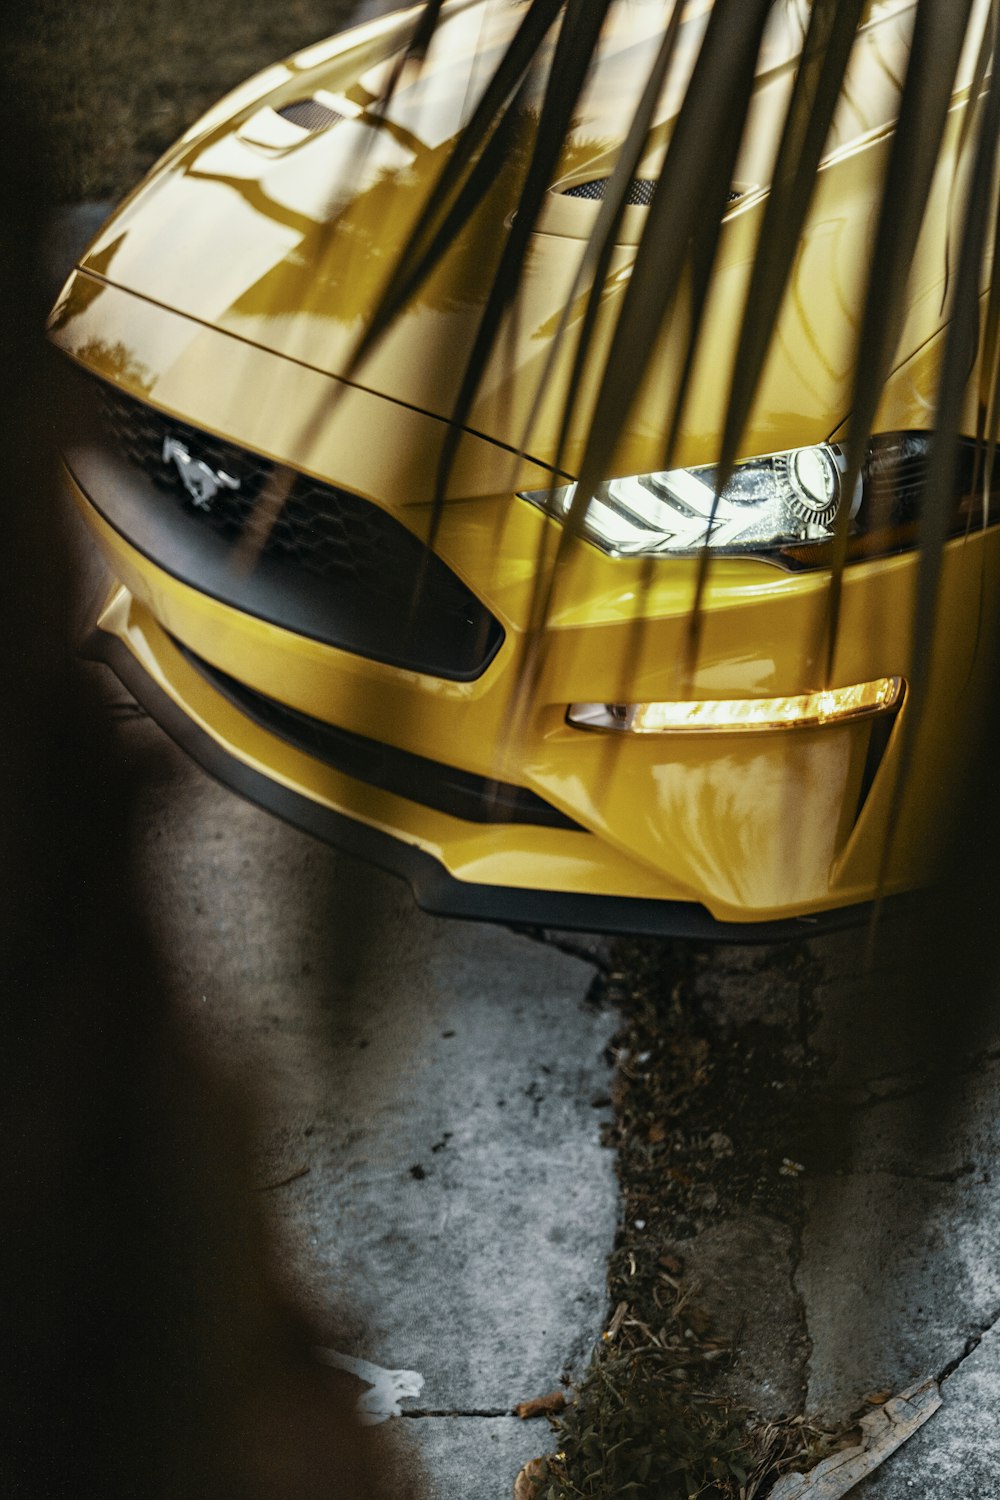 yellow and black Ferrari car